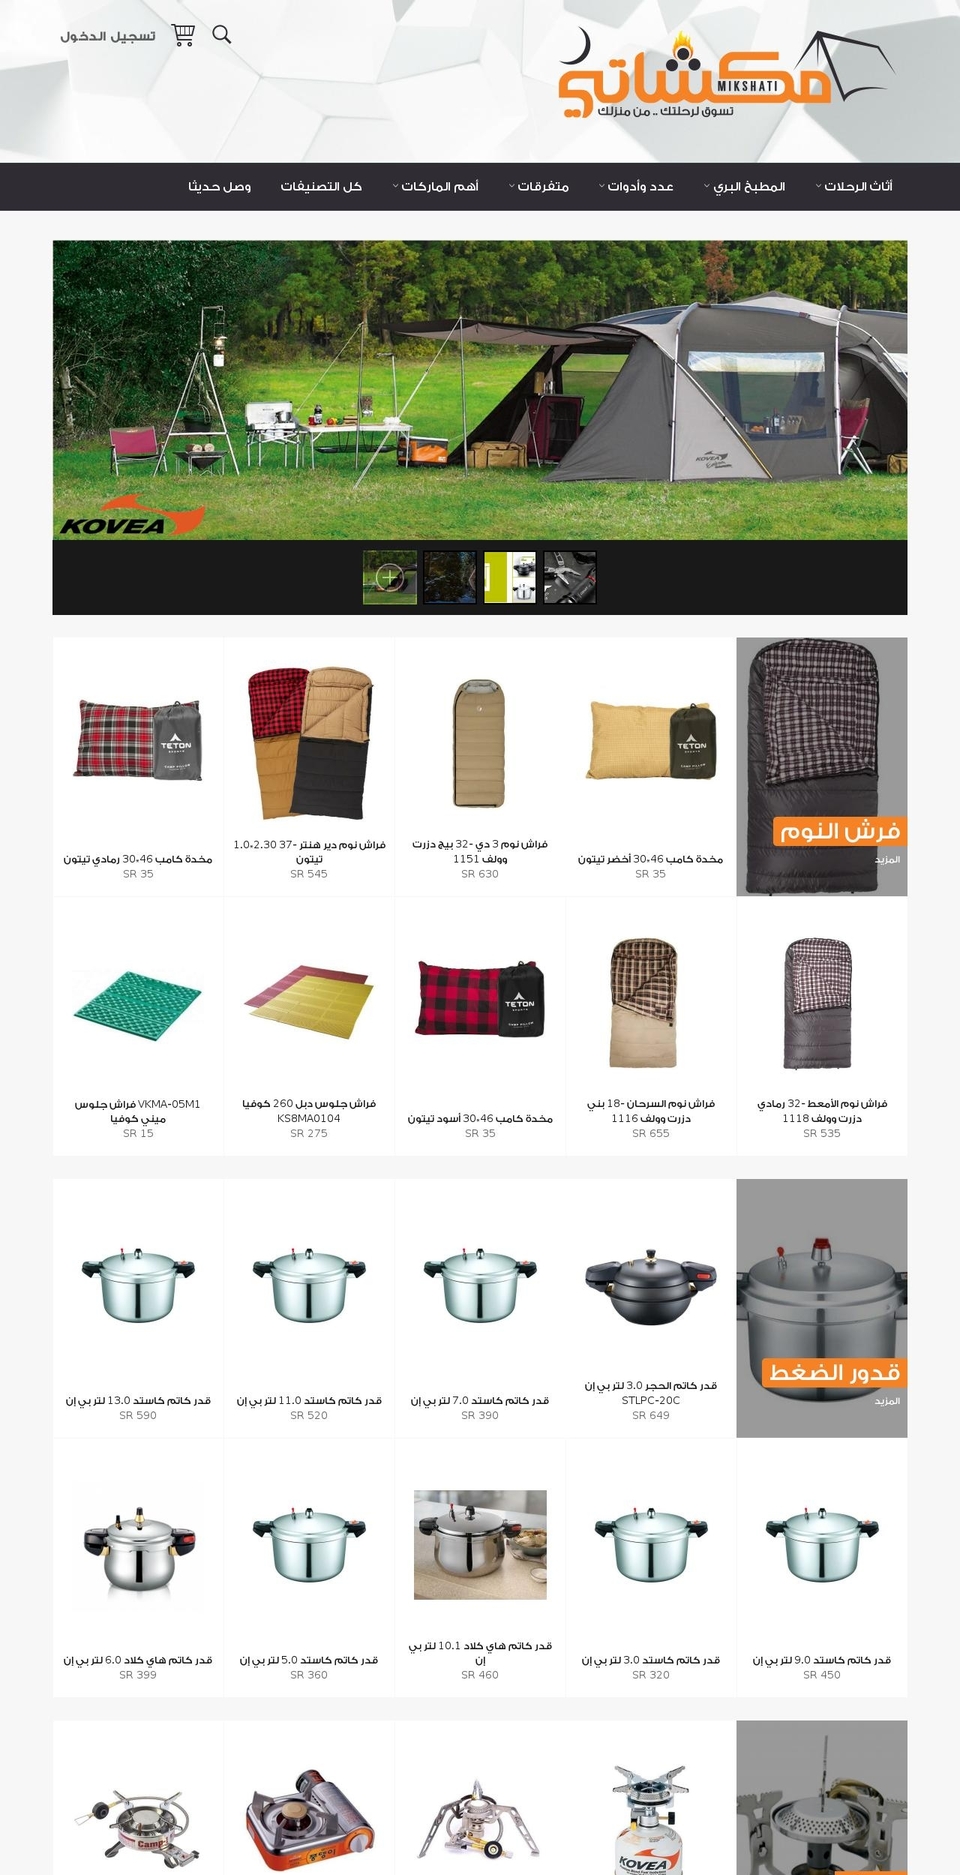 mikshati.com shopify website screenshot